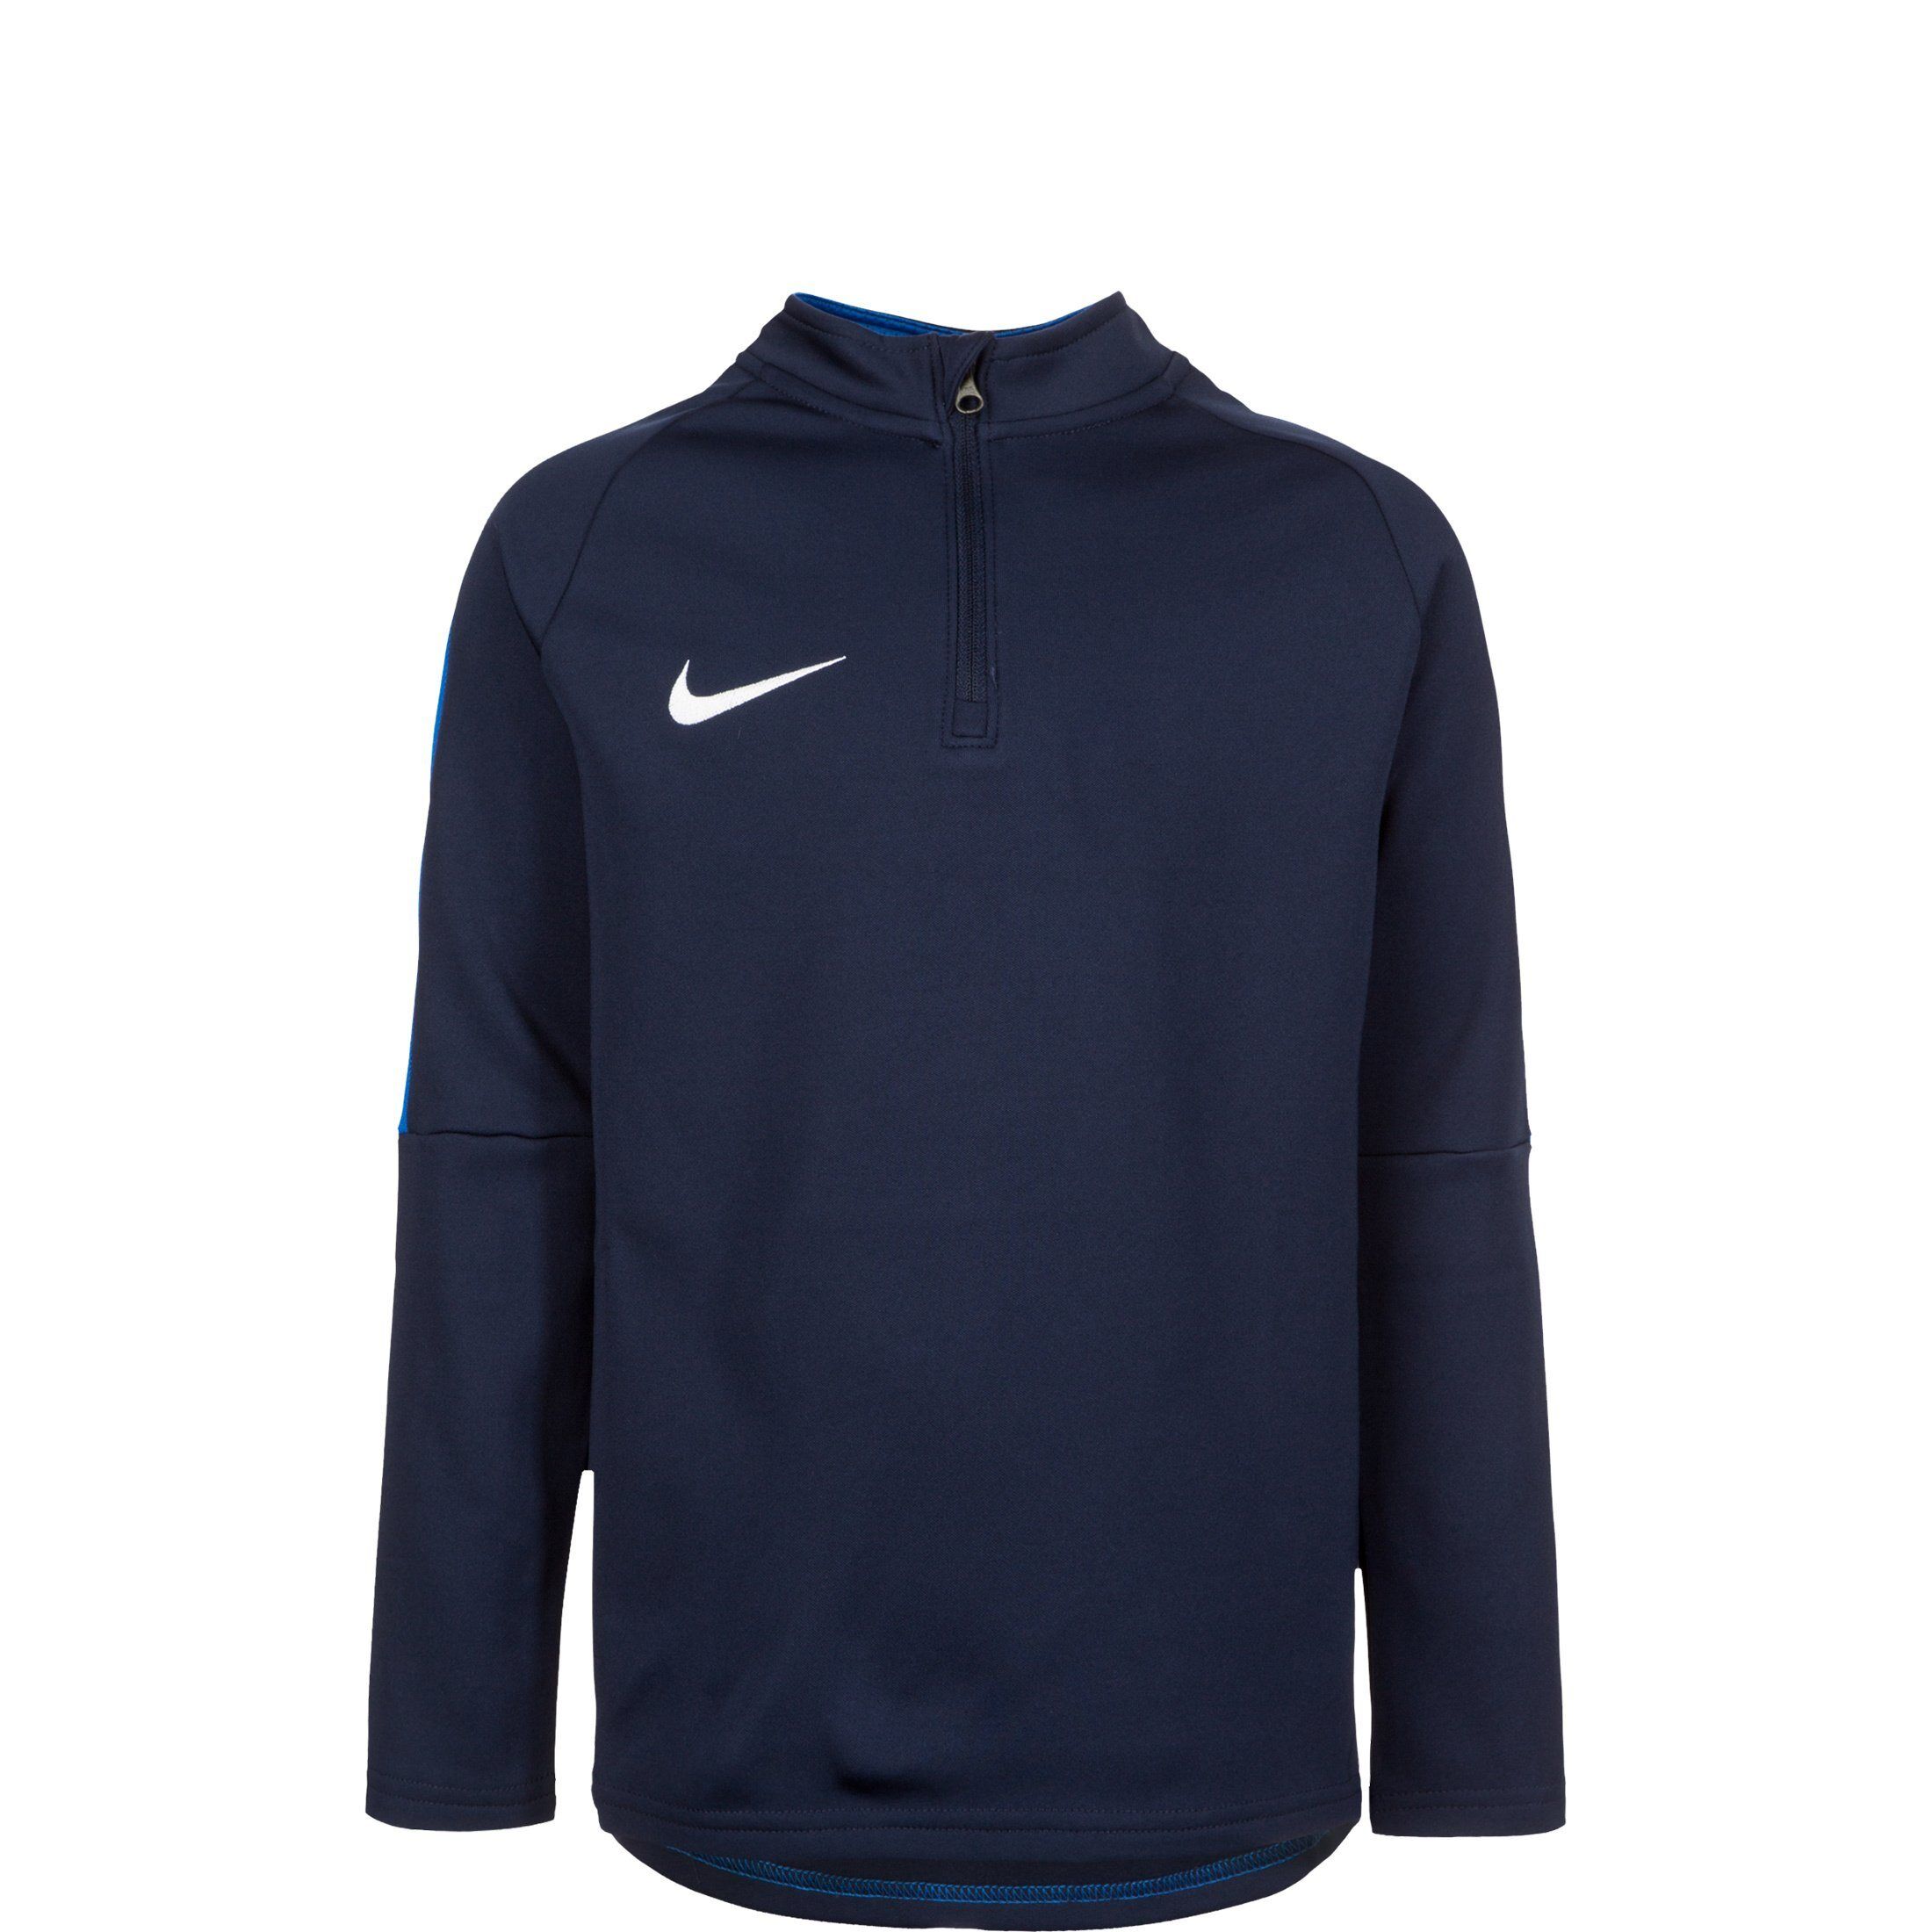 Nike Trainingsshirt »Academy 18 Drill«, dunkelblau